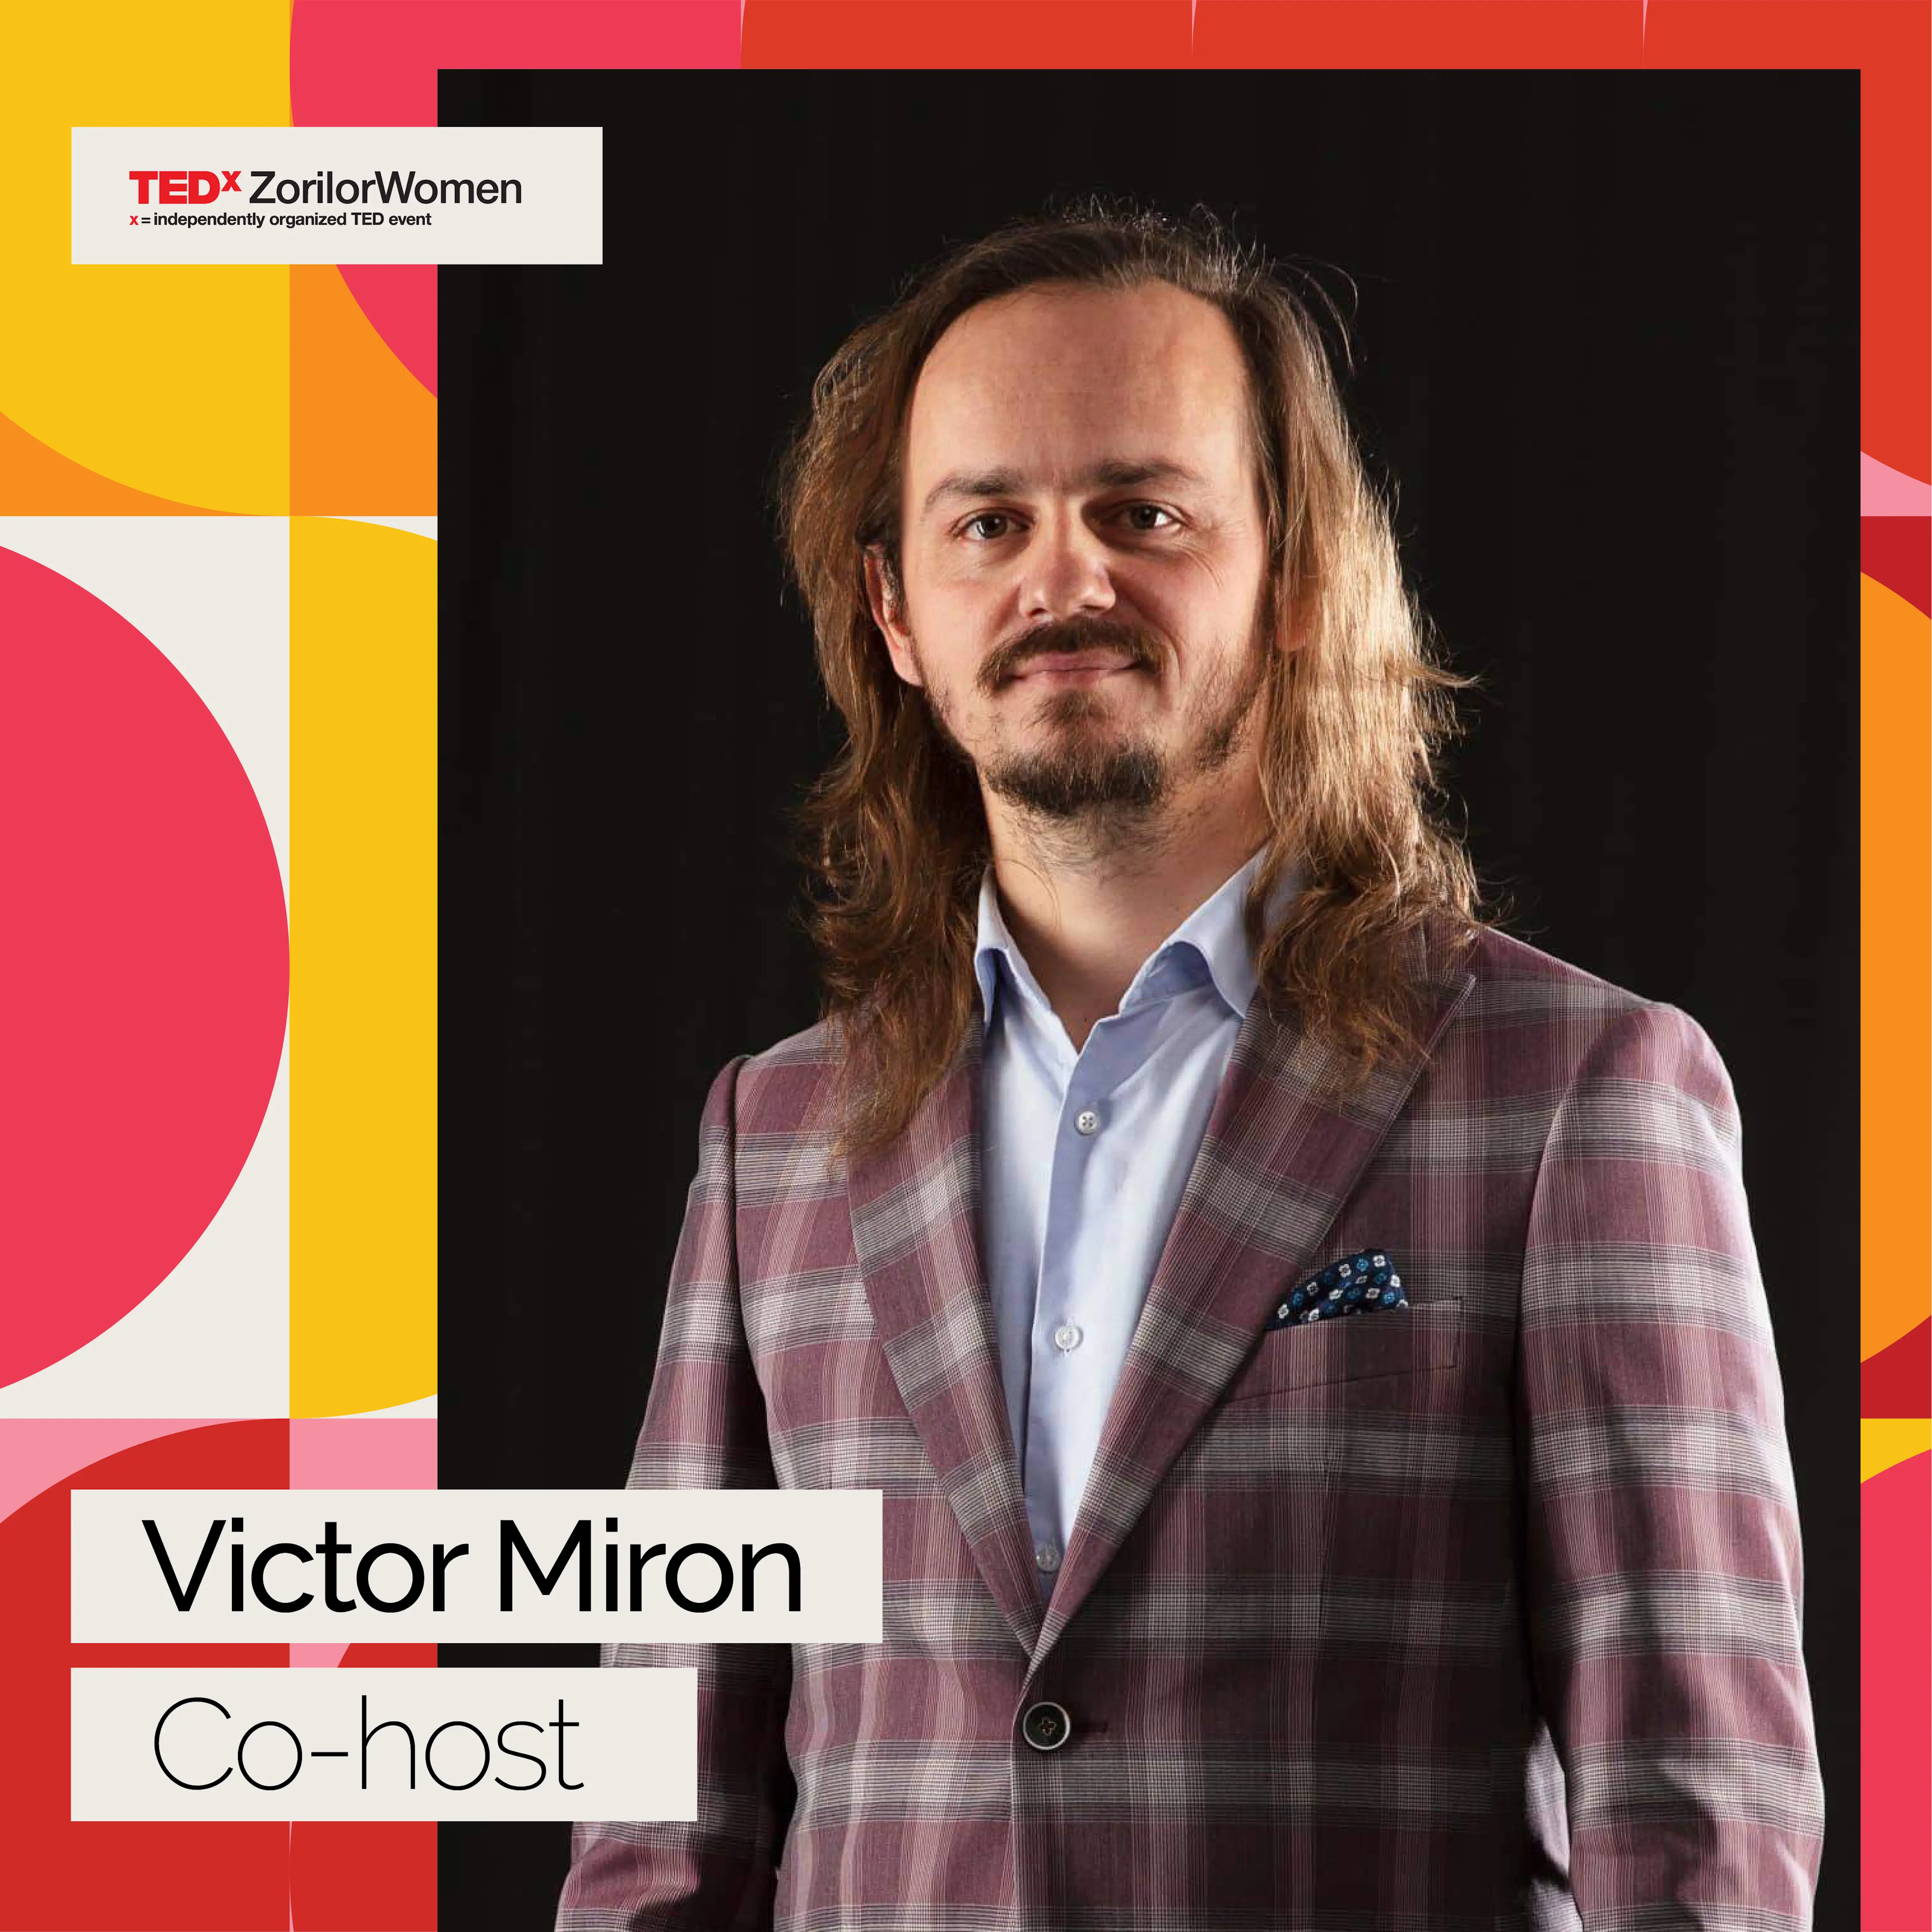 Victor Miron